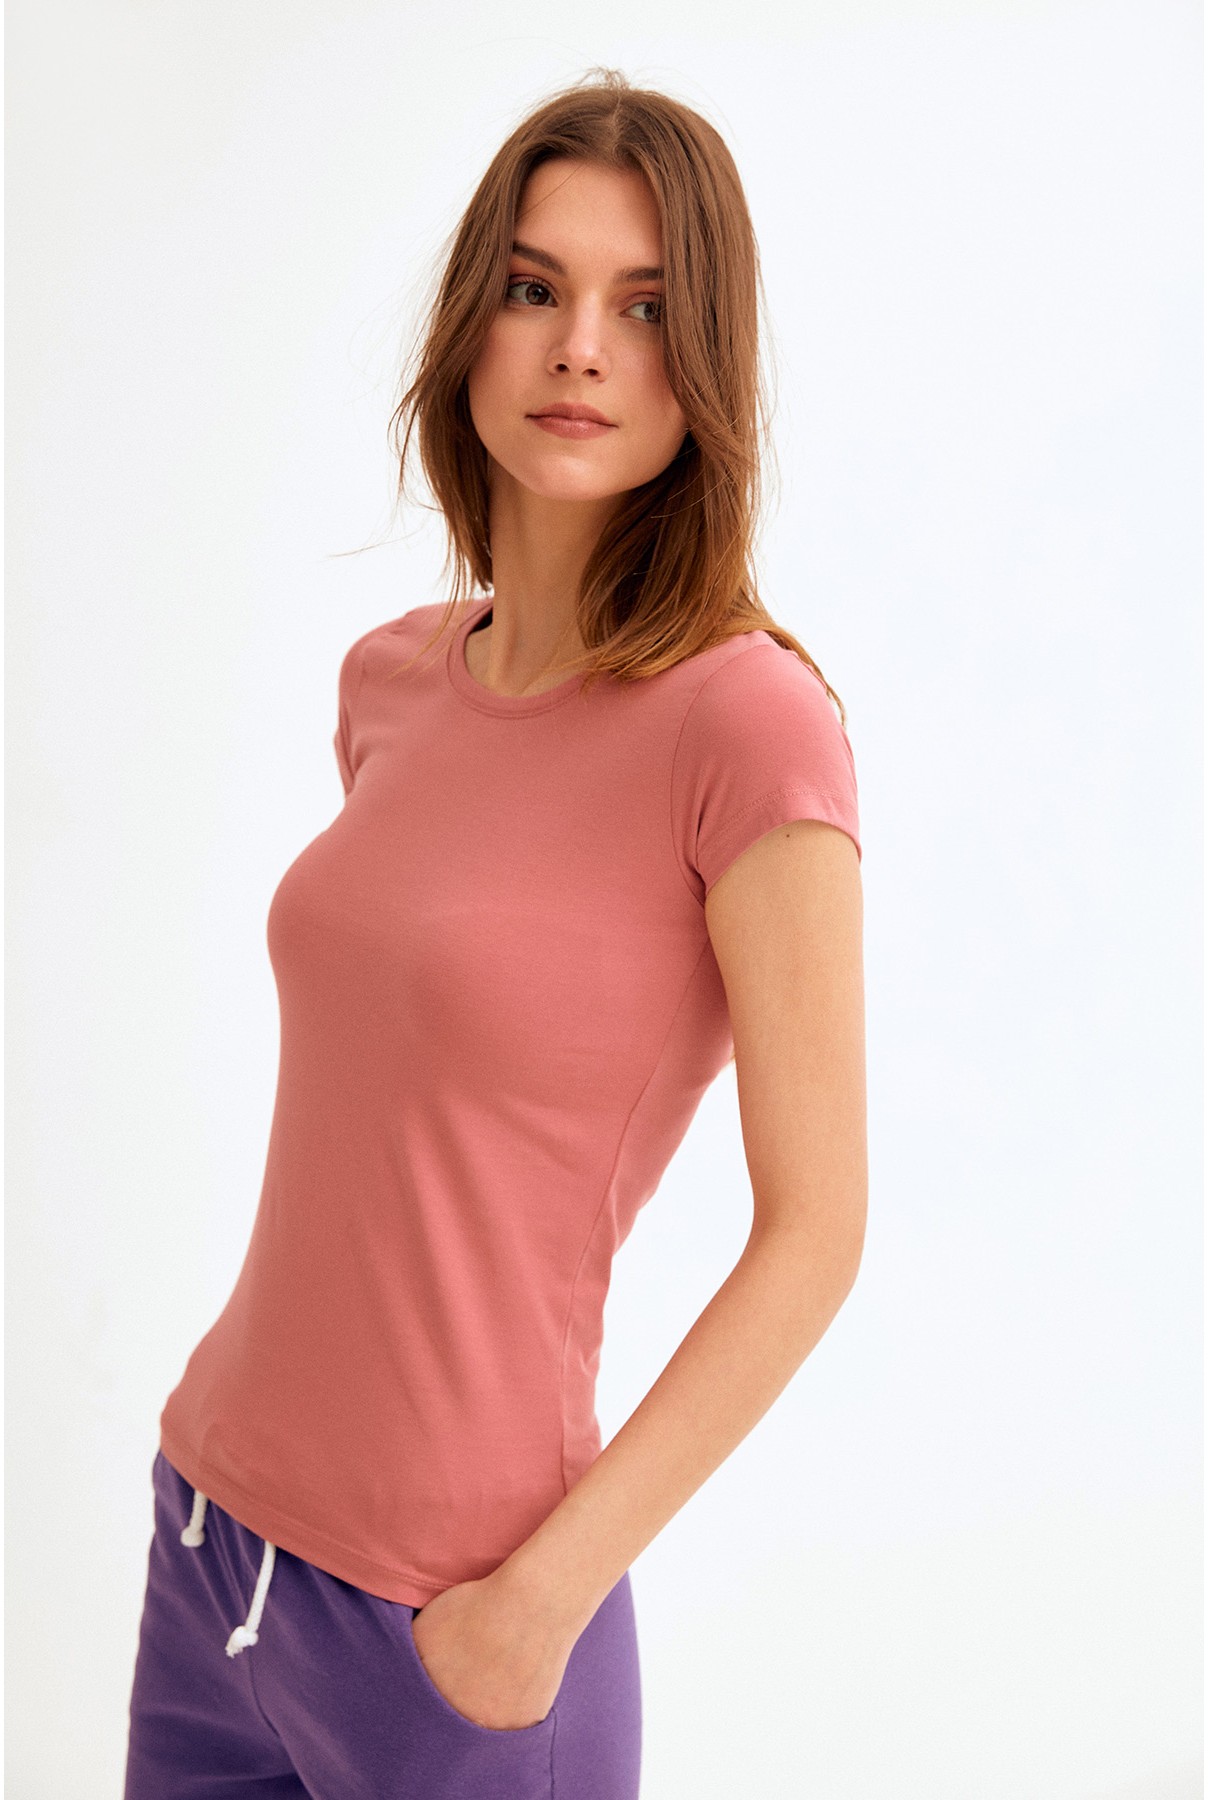 T-shirt pink color